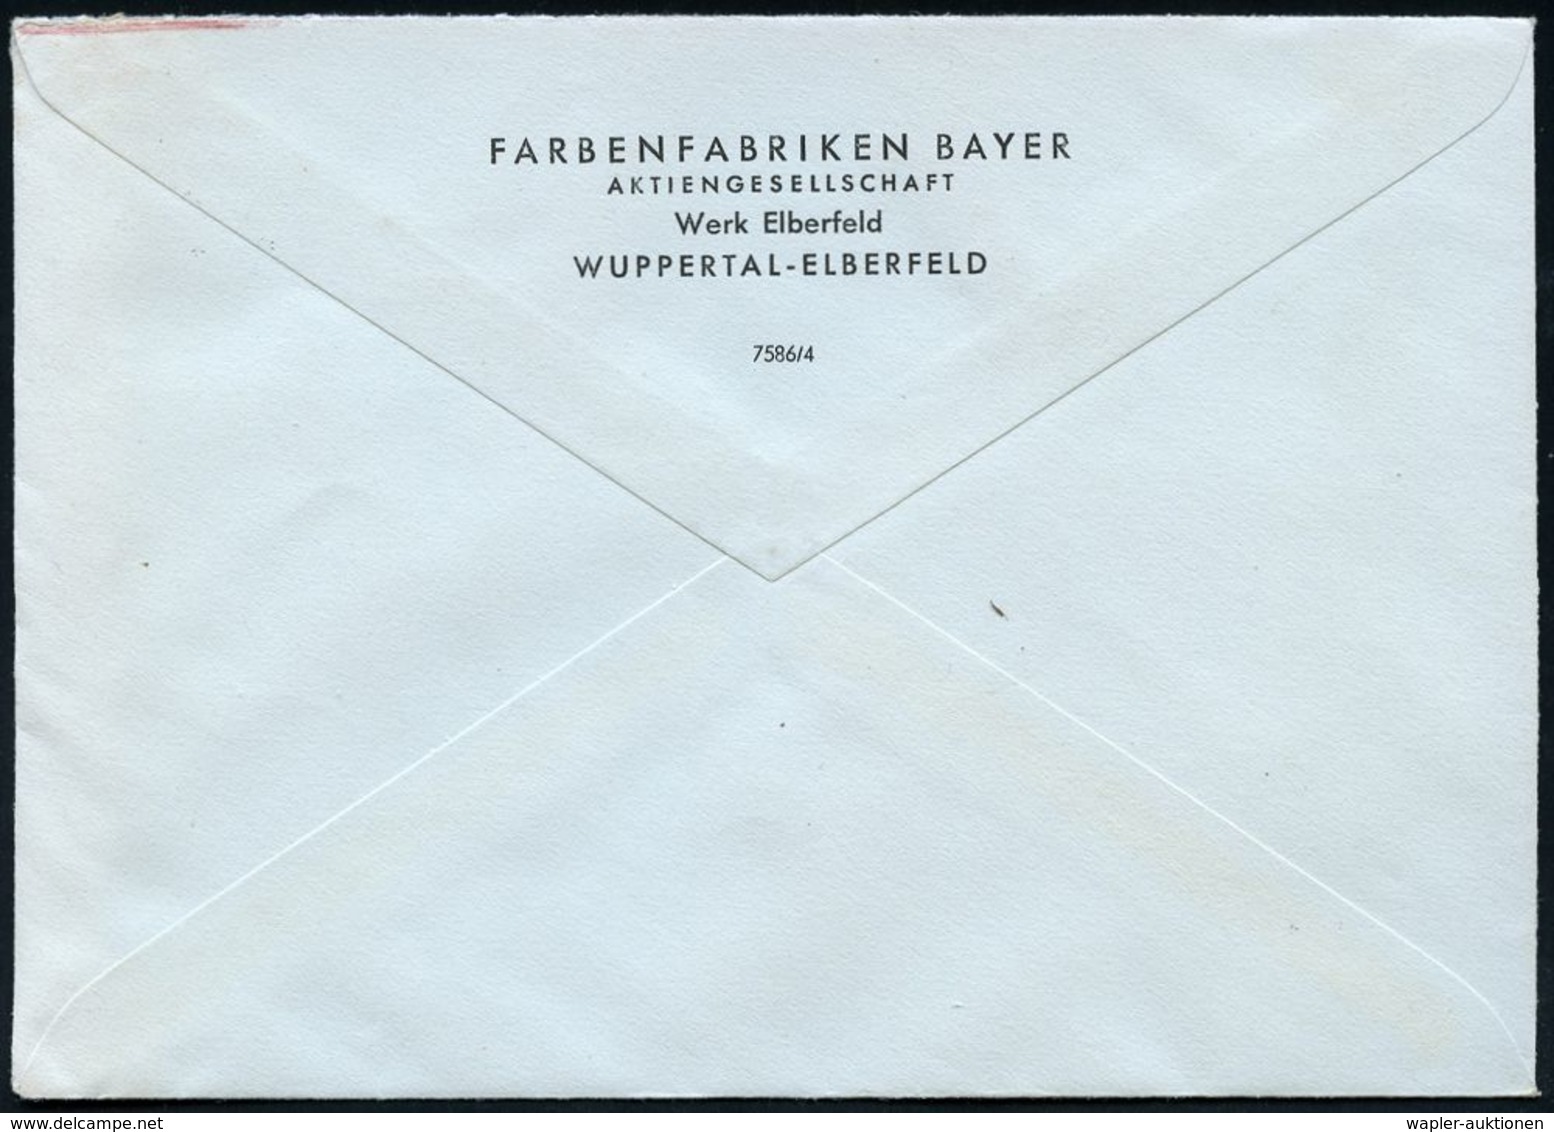 PHARMAZIE / MEDIKAMENTE : (22a) WUPPERTAL-ELBERFELD 4/ BAYER/ .."Bayer"-ARZNEIMITTEL 1954 (28.12.) Seltener AFS (Firmen- - Pharmacy